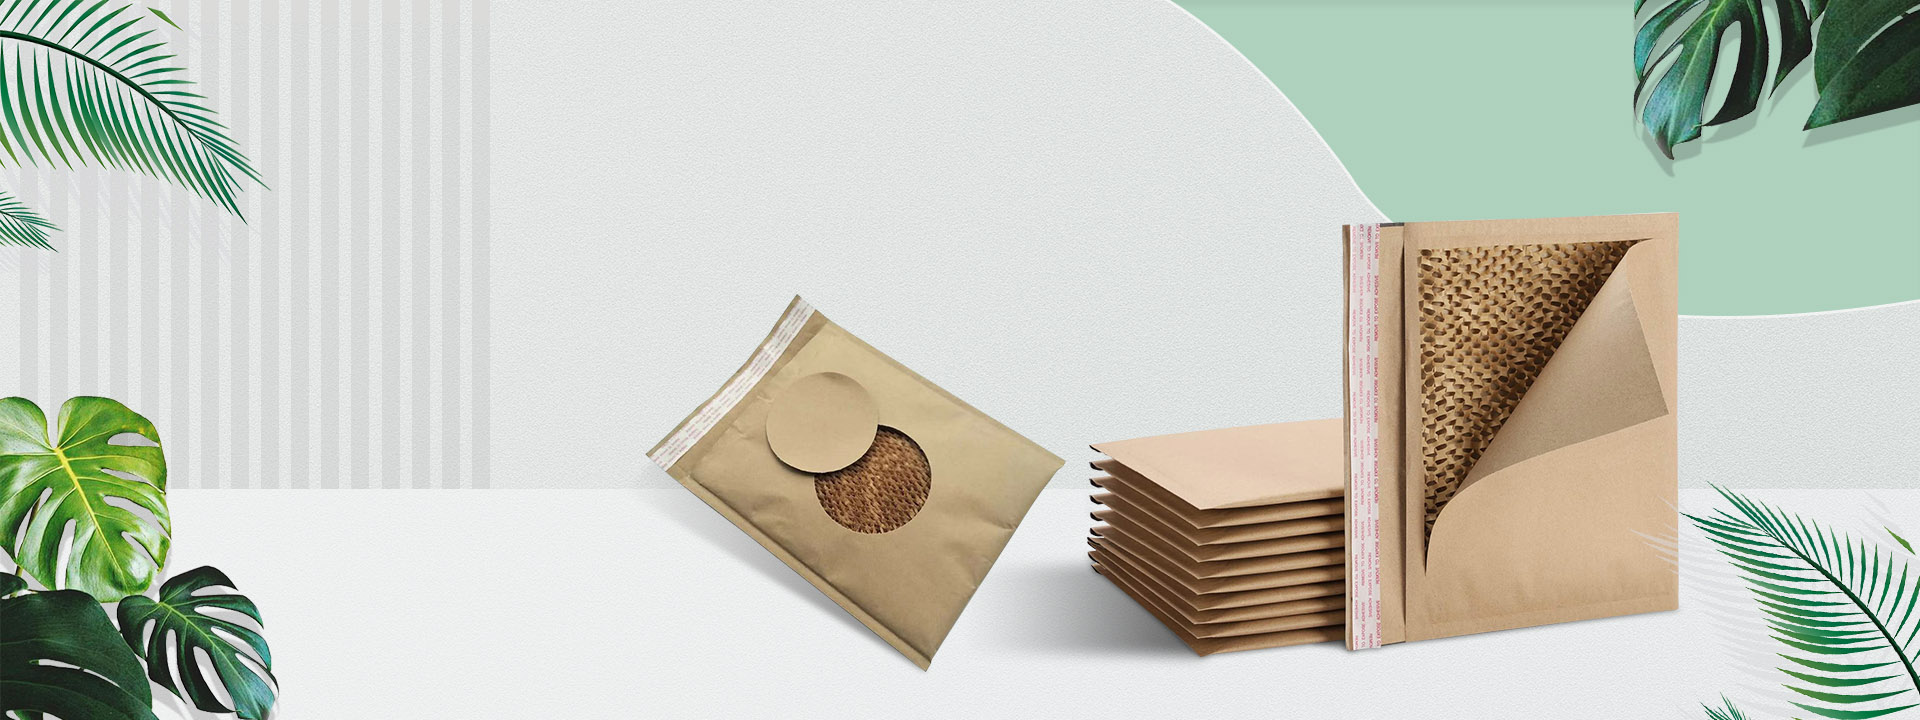 Eco Paper Box sandwich with lids